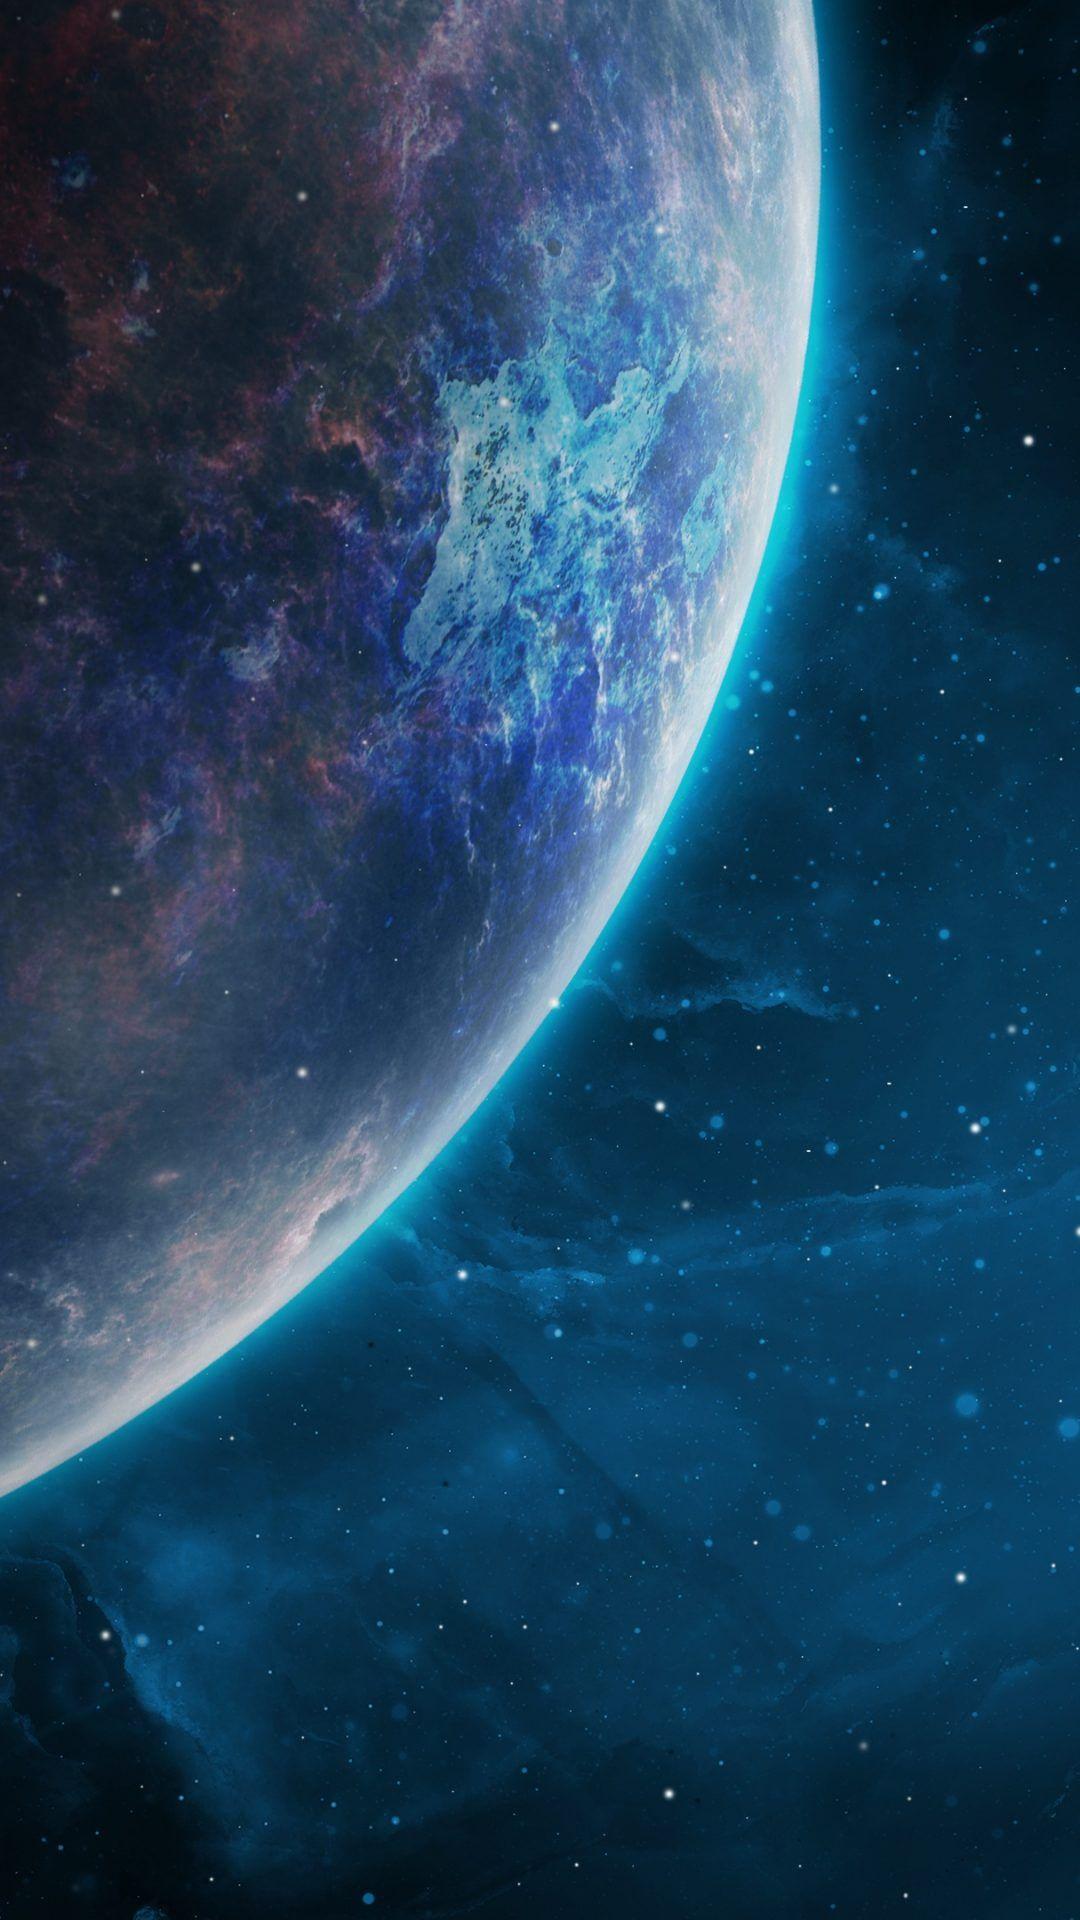 1080p blue planet wallpaper